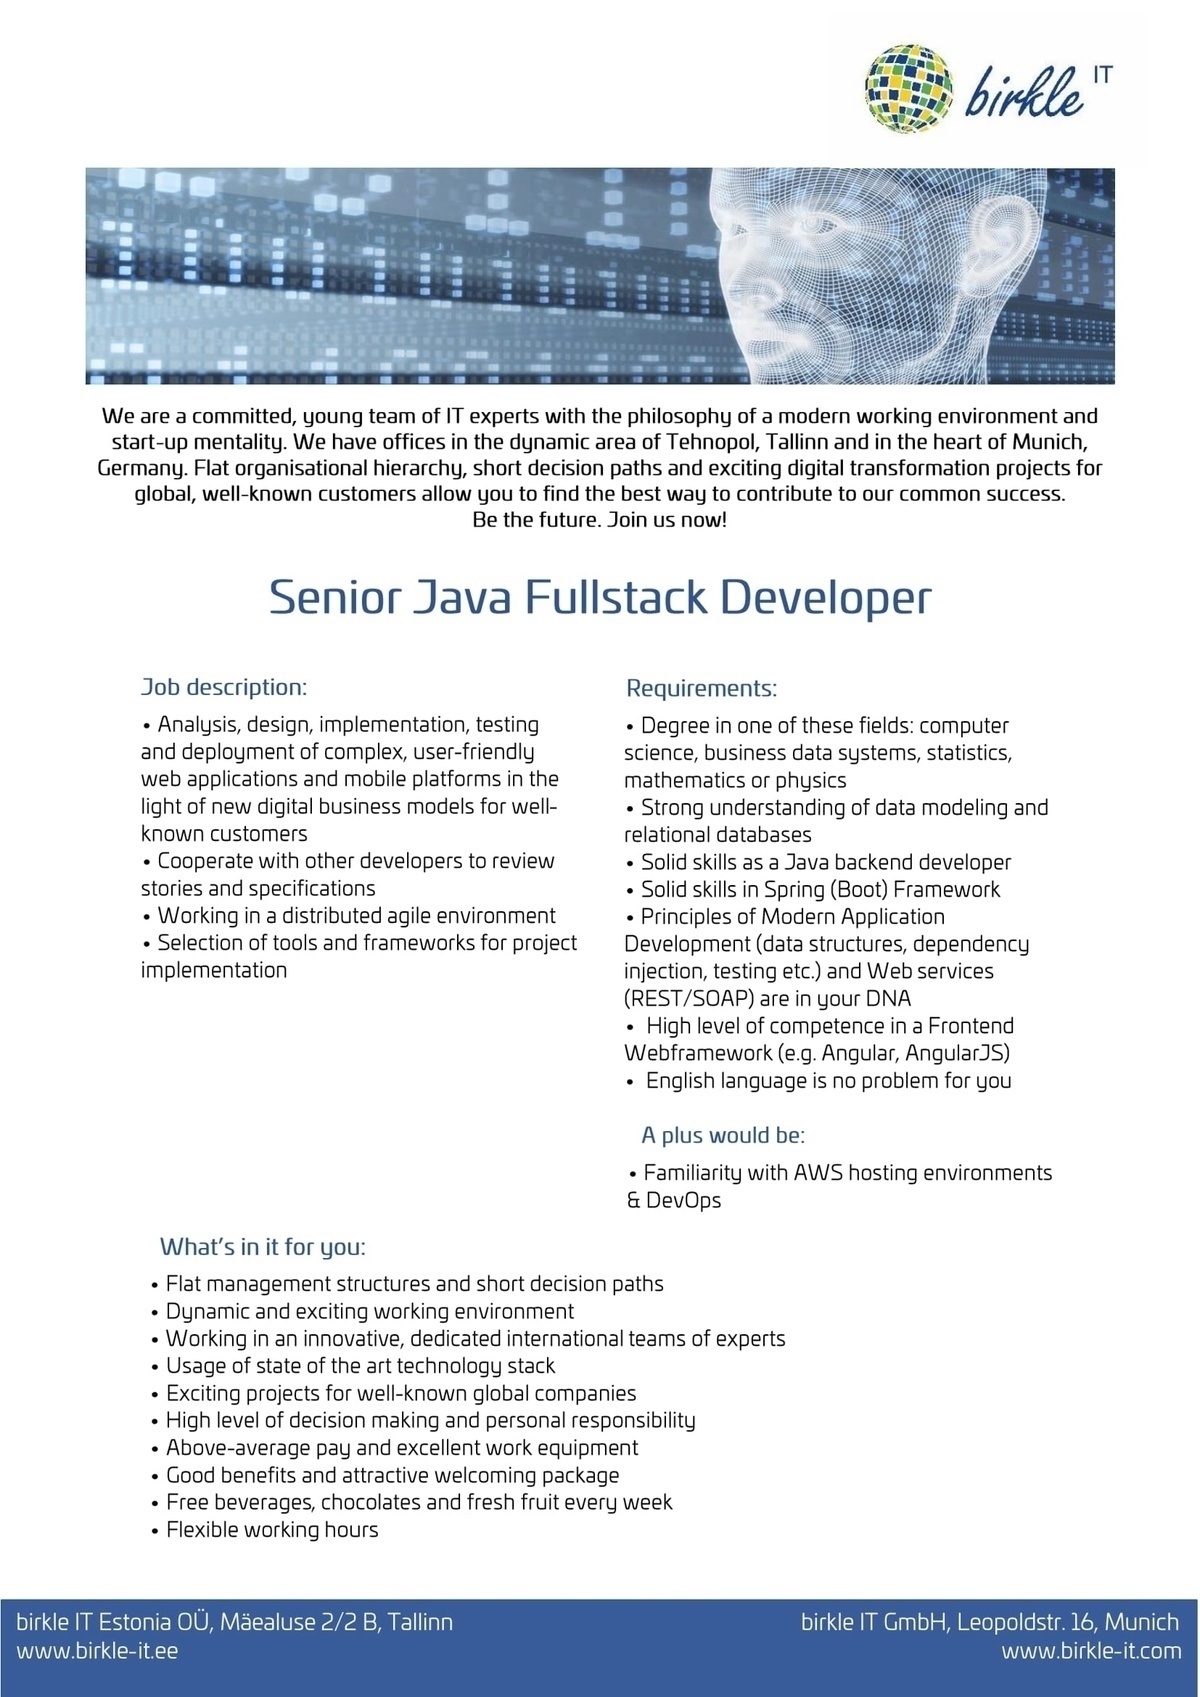 Birkle IT Estonia OÜ Senior Java Full-Stack Developer